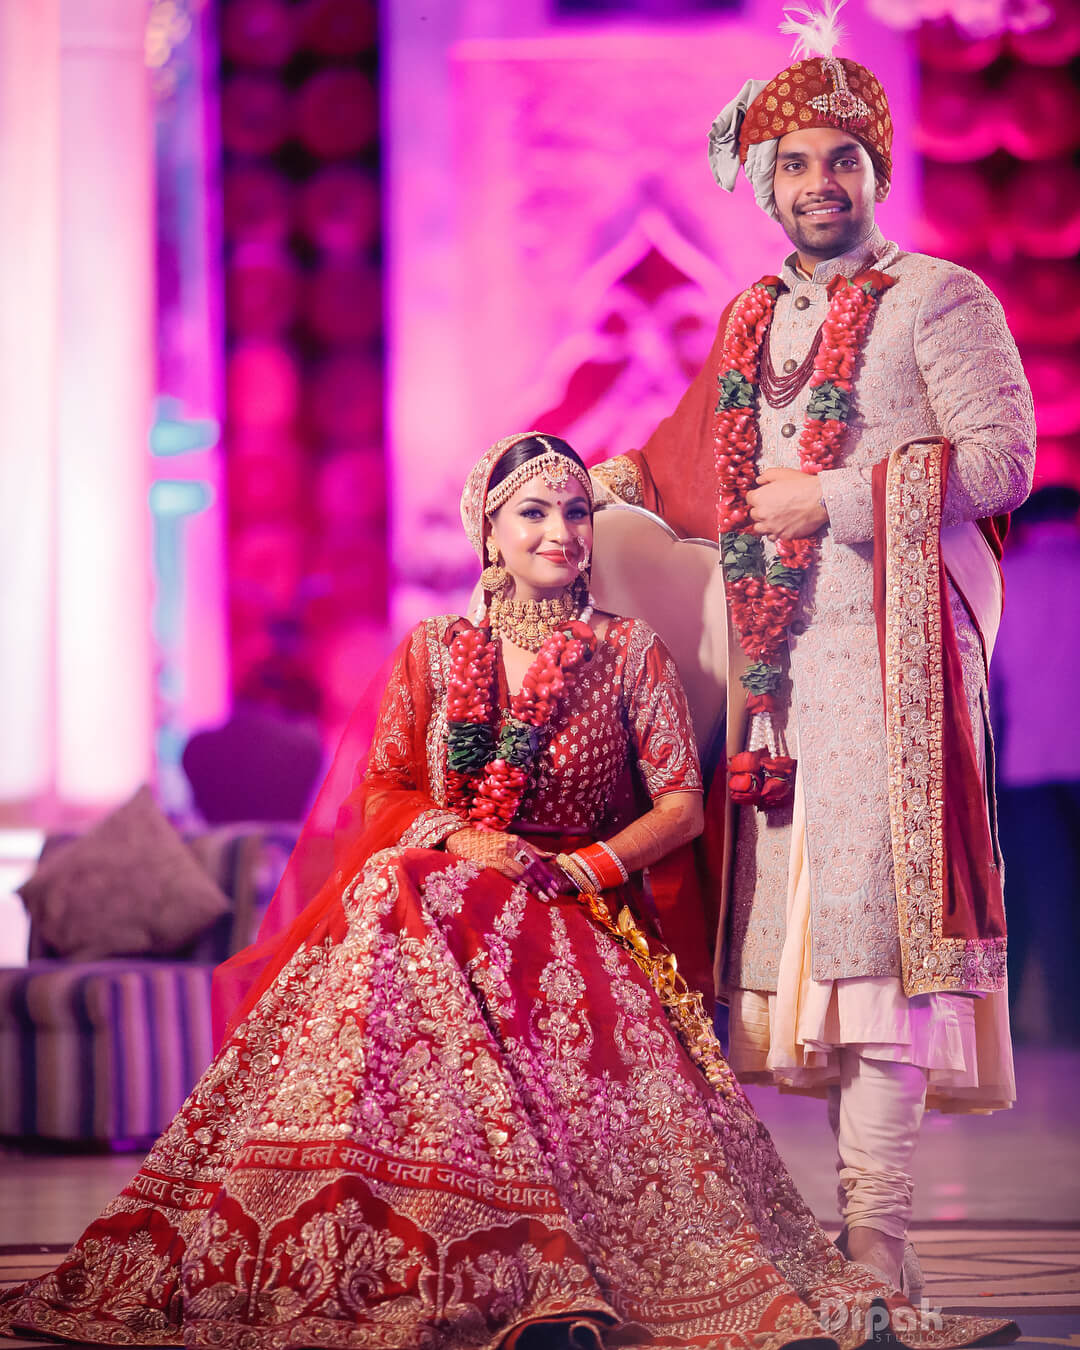 Nancy and Rishi | Jodhpur | WeddingSutra